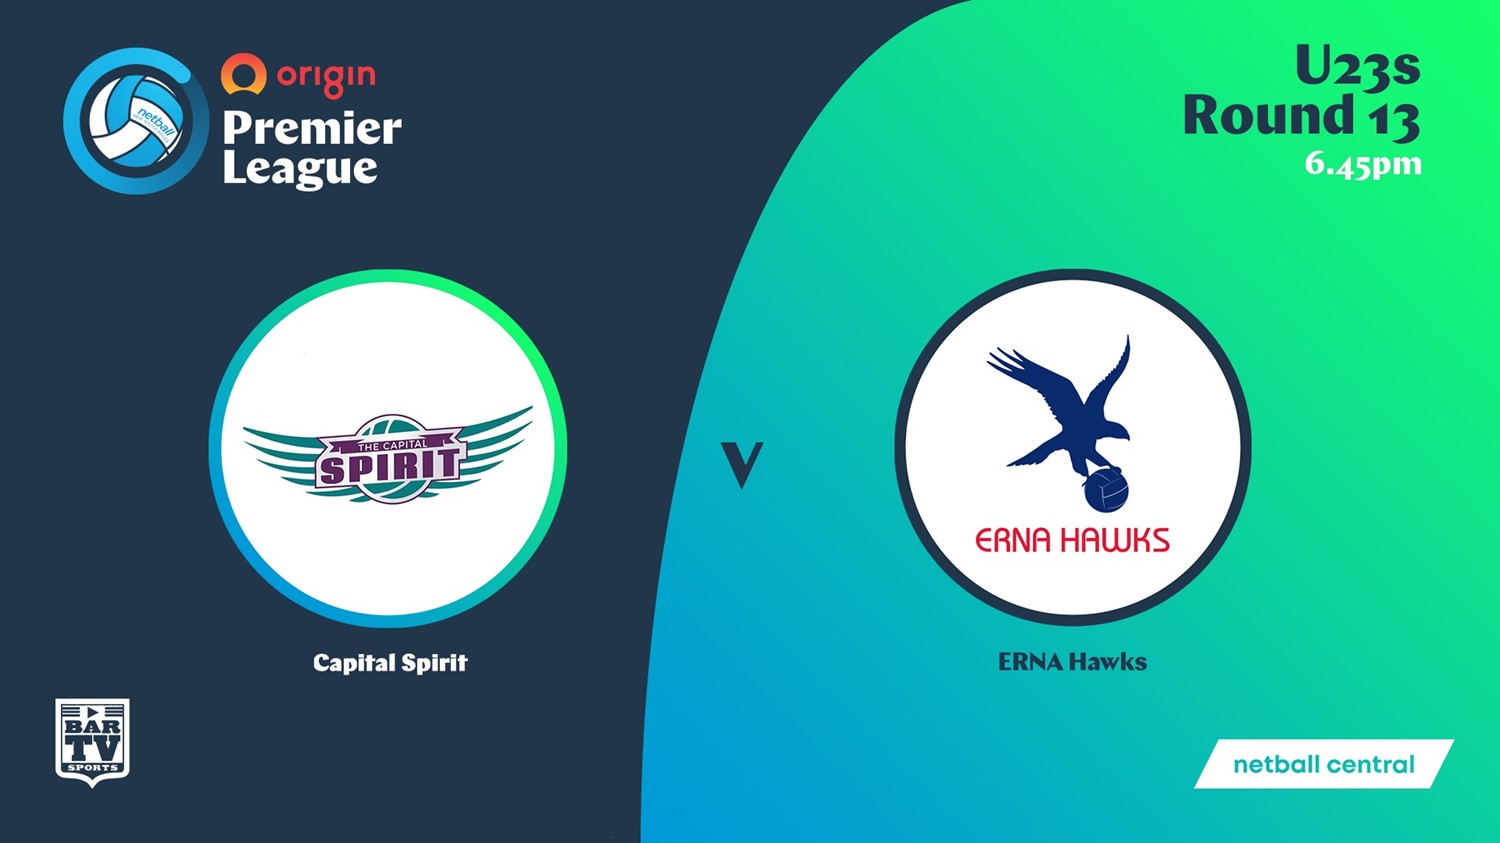 NSW Prem League Round 13 - U23s - Capital Spirit v Erna Hawks Minigame Slate Image